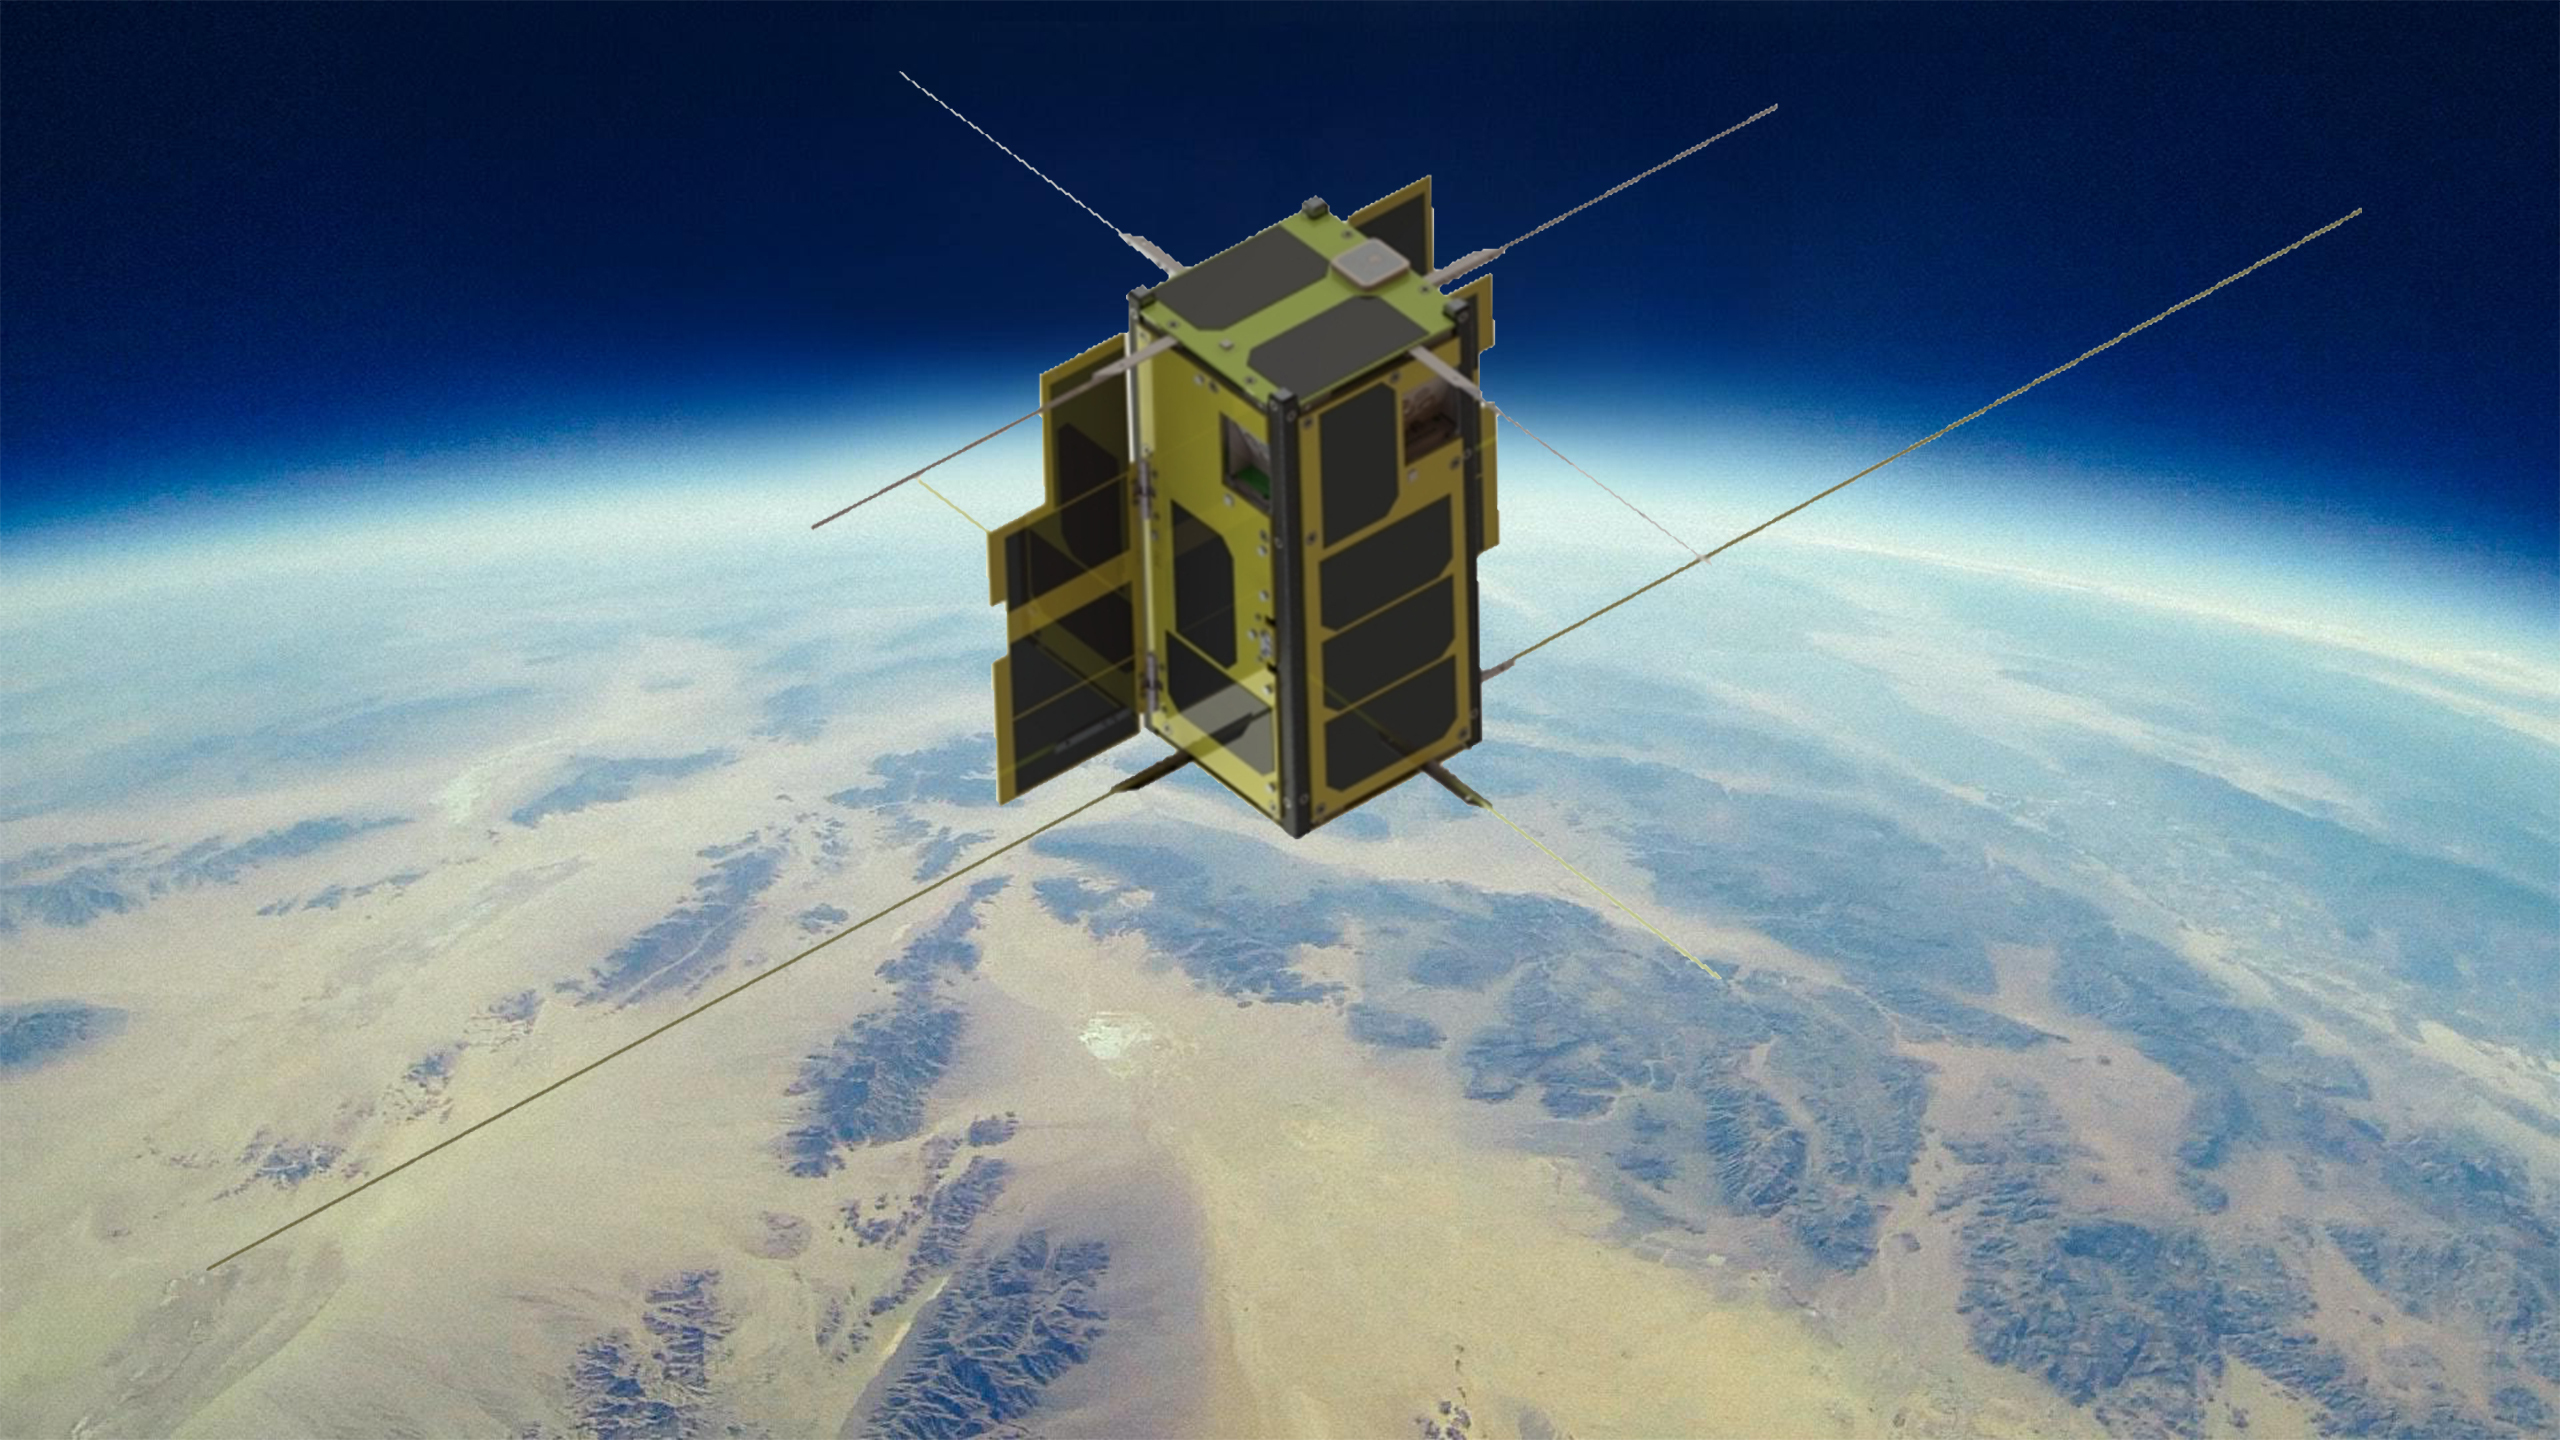 「IRIS-A」立方衛星目前於太空中順利執行任務